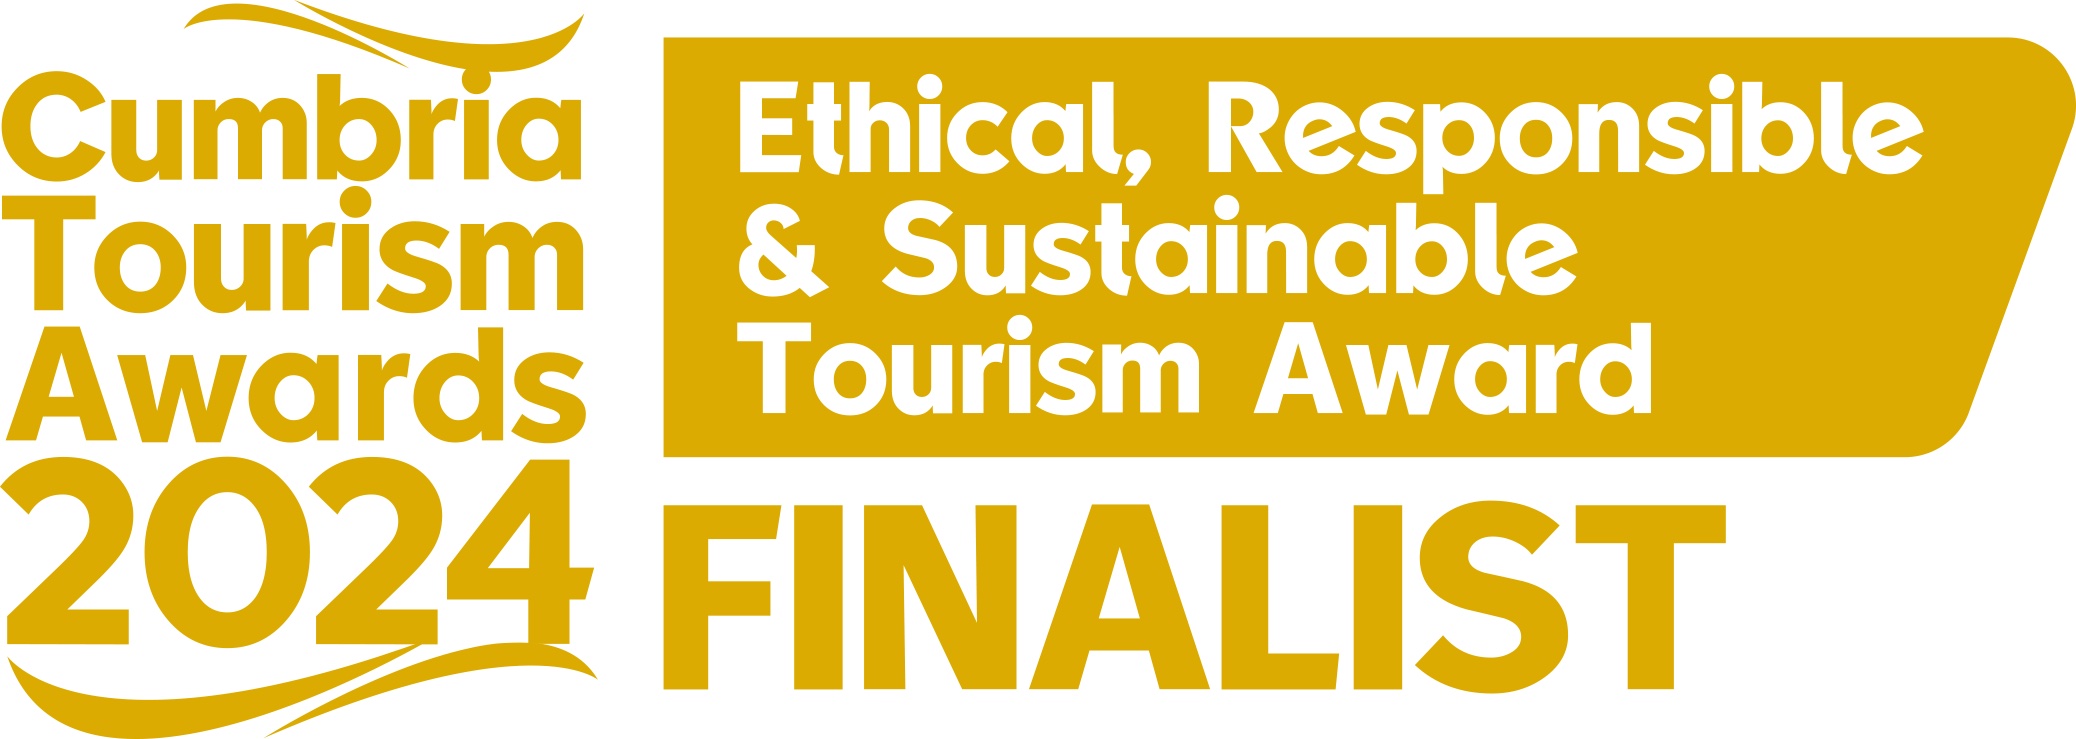 Cumbria Tourism Awards Ethical Tourism Finalist